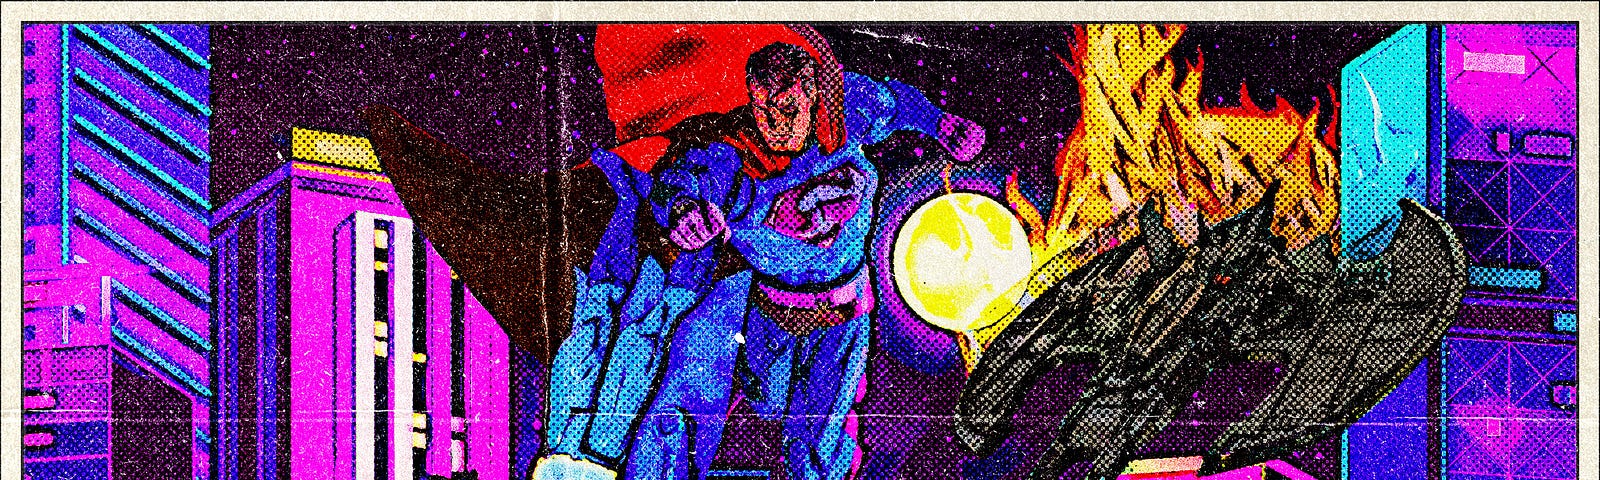 Superman rescues Batman from flaming Batplane